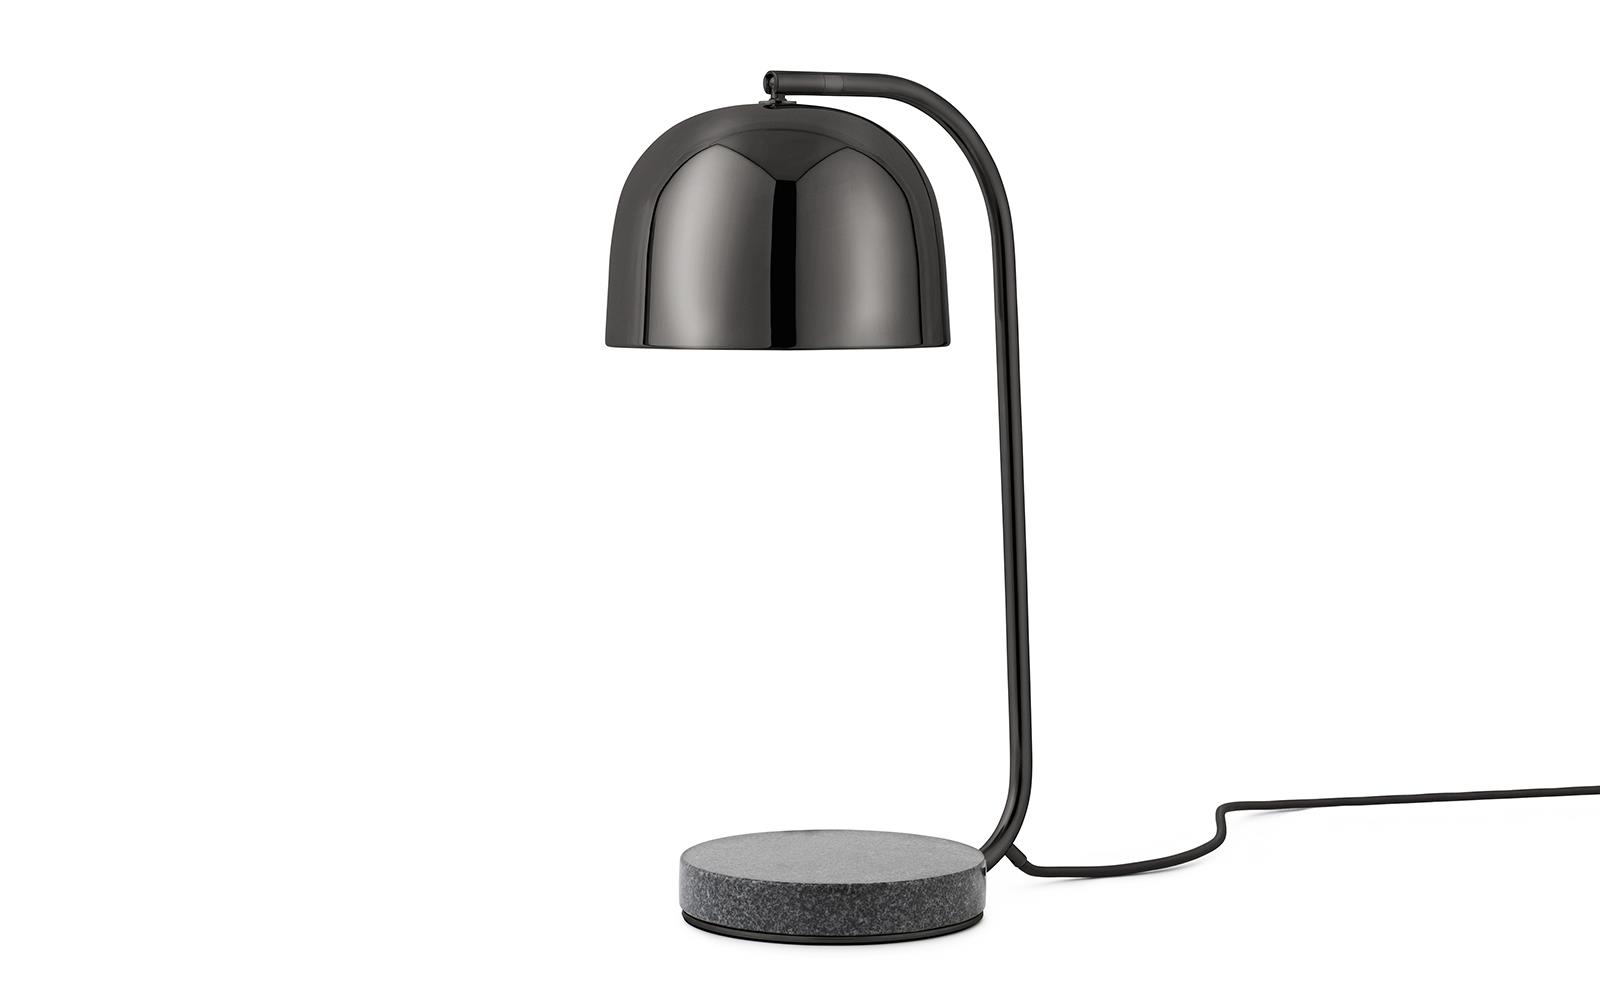 Grant A Classic Table Lamp In Scandinavian Design